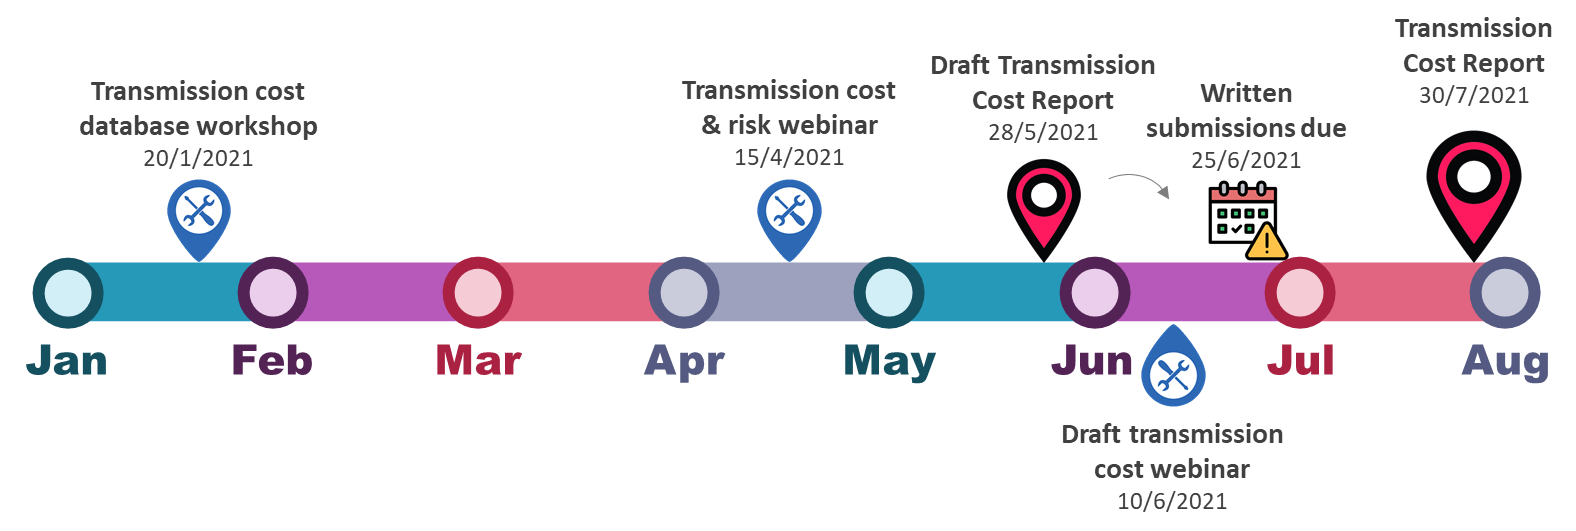 Transmission costs consultation timeline